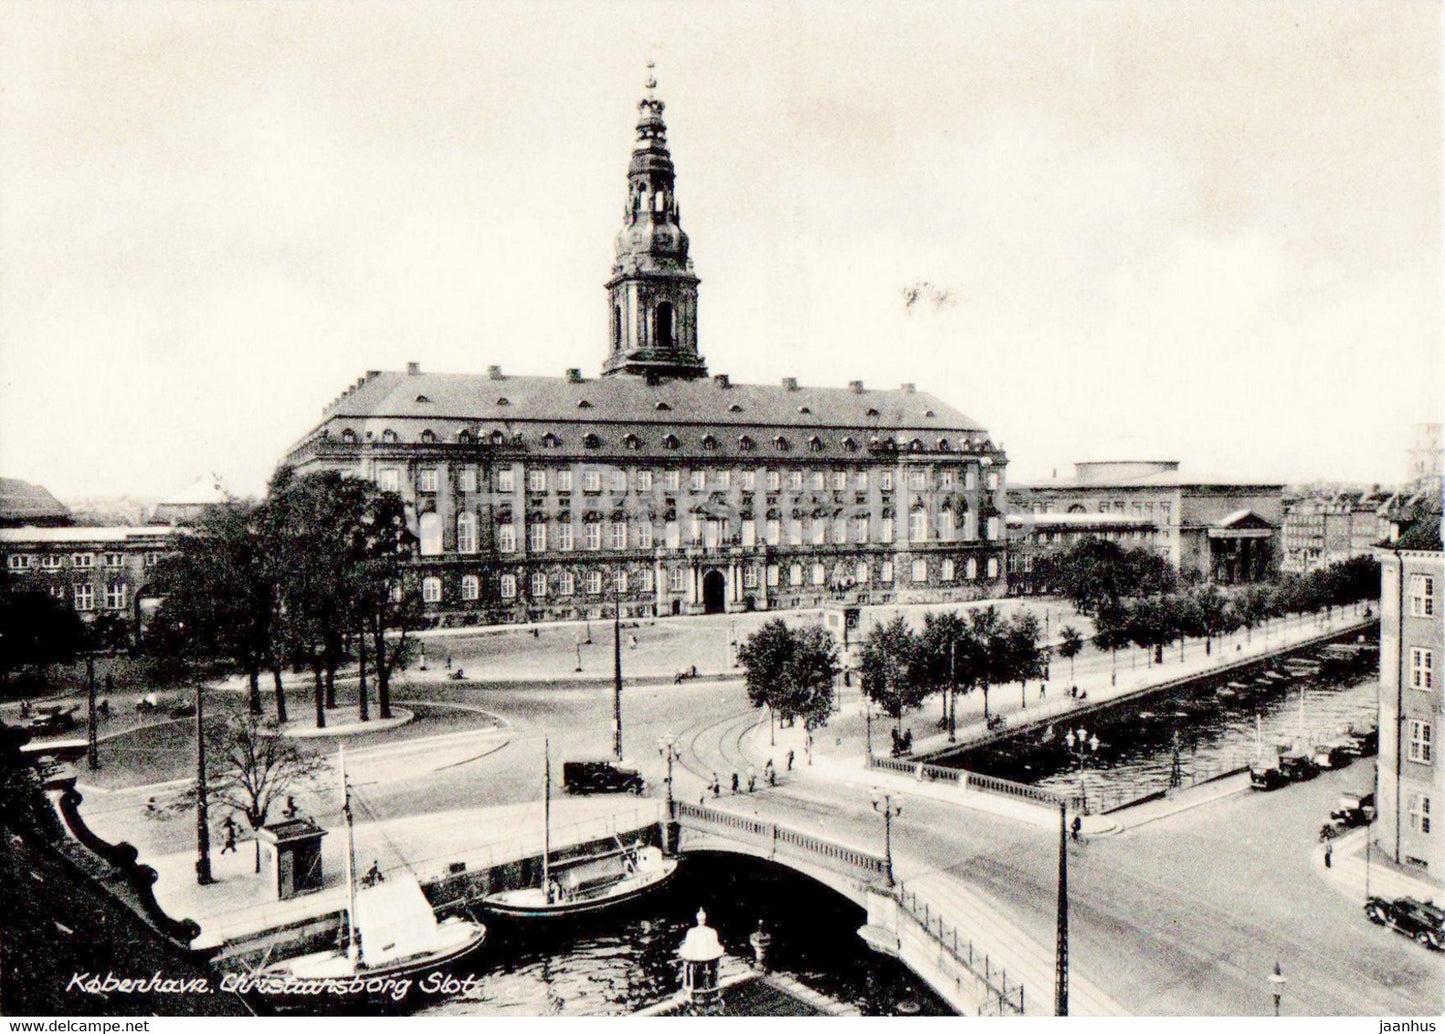 Copenhagen - Christiansborg Palace - 266 - old postcard - Denmark - unused - JH Postcards